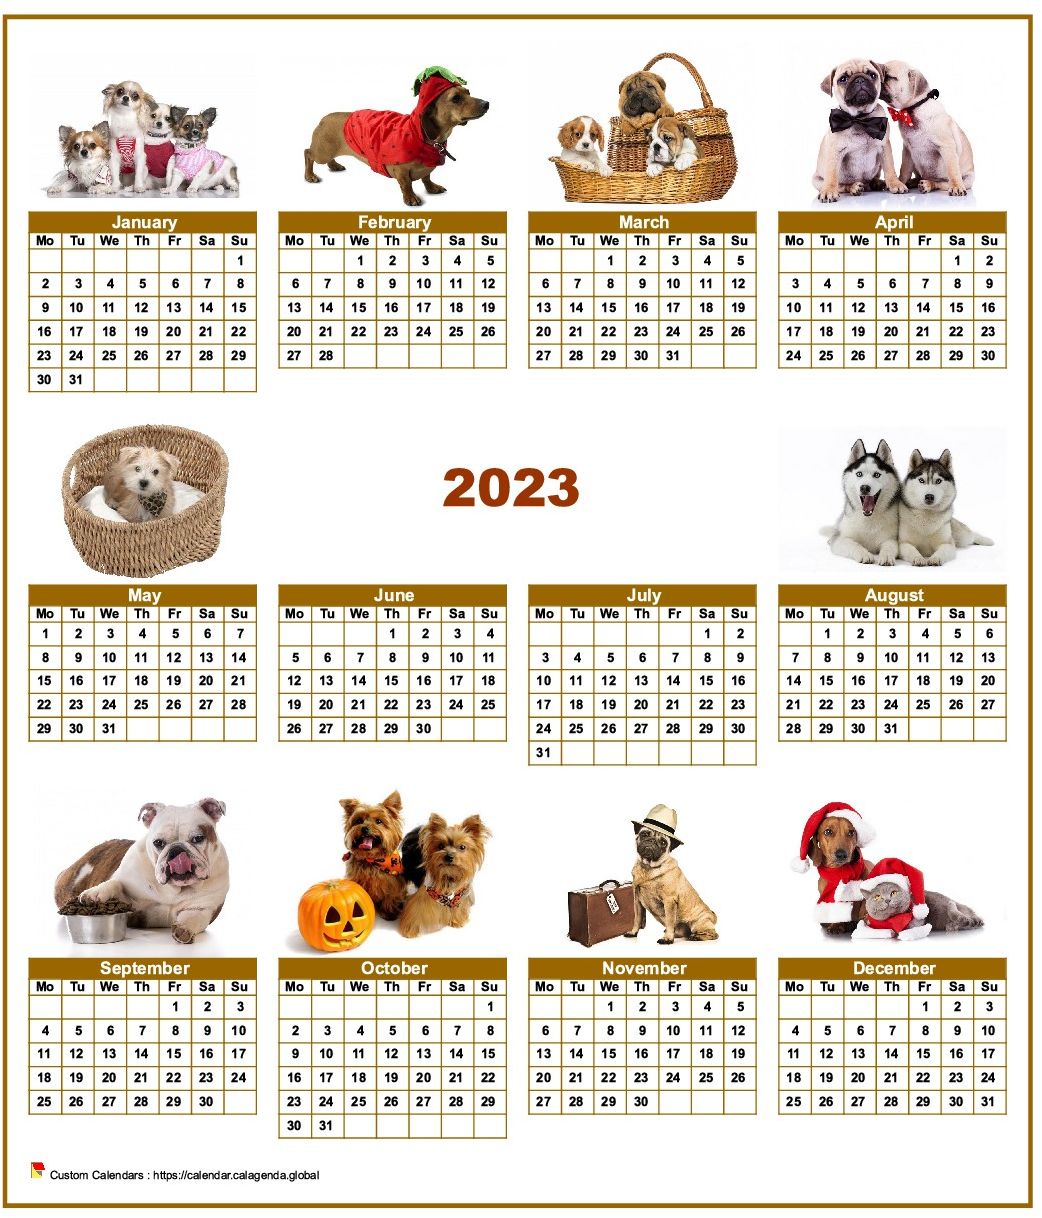 Calendar 2023 annual special 'dogs ' with 10 photos